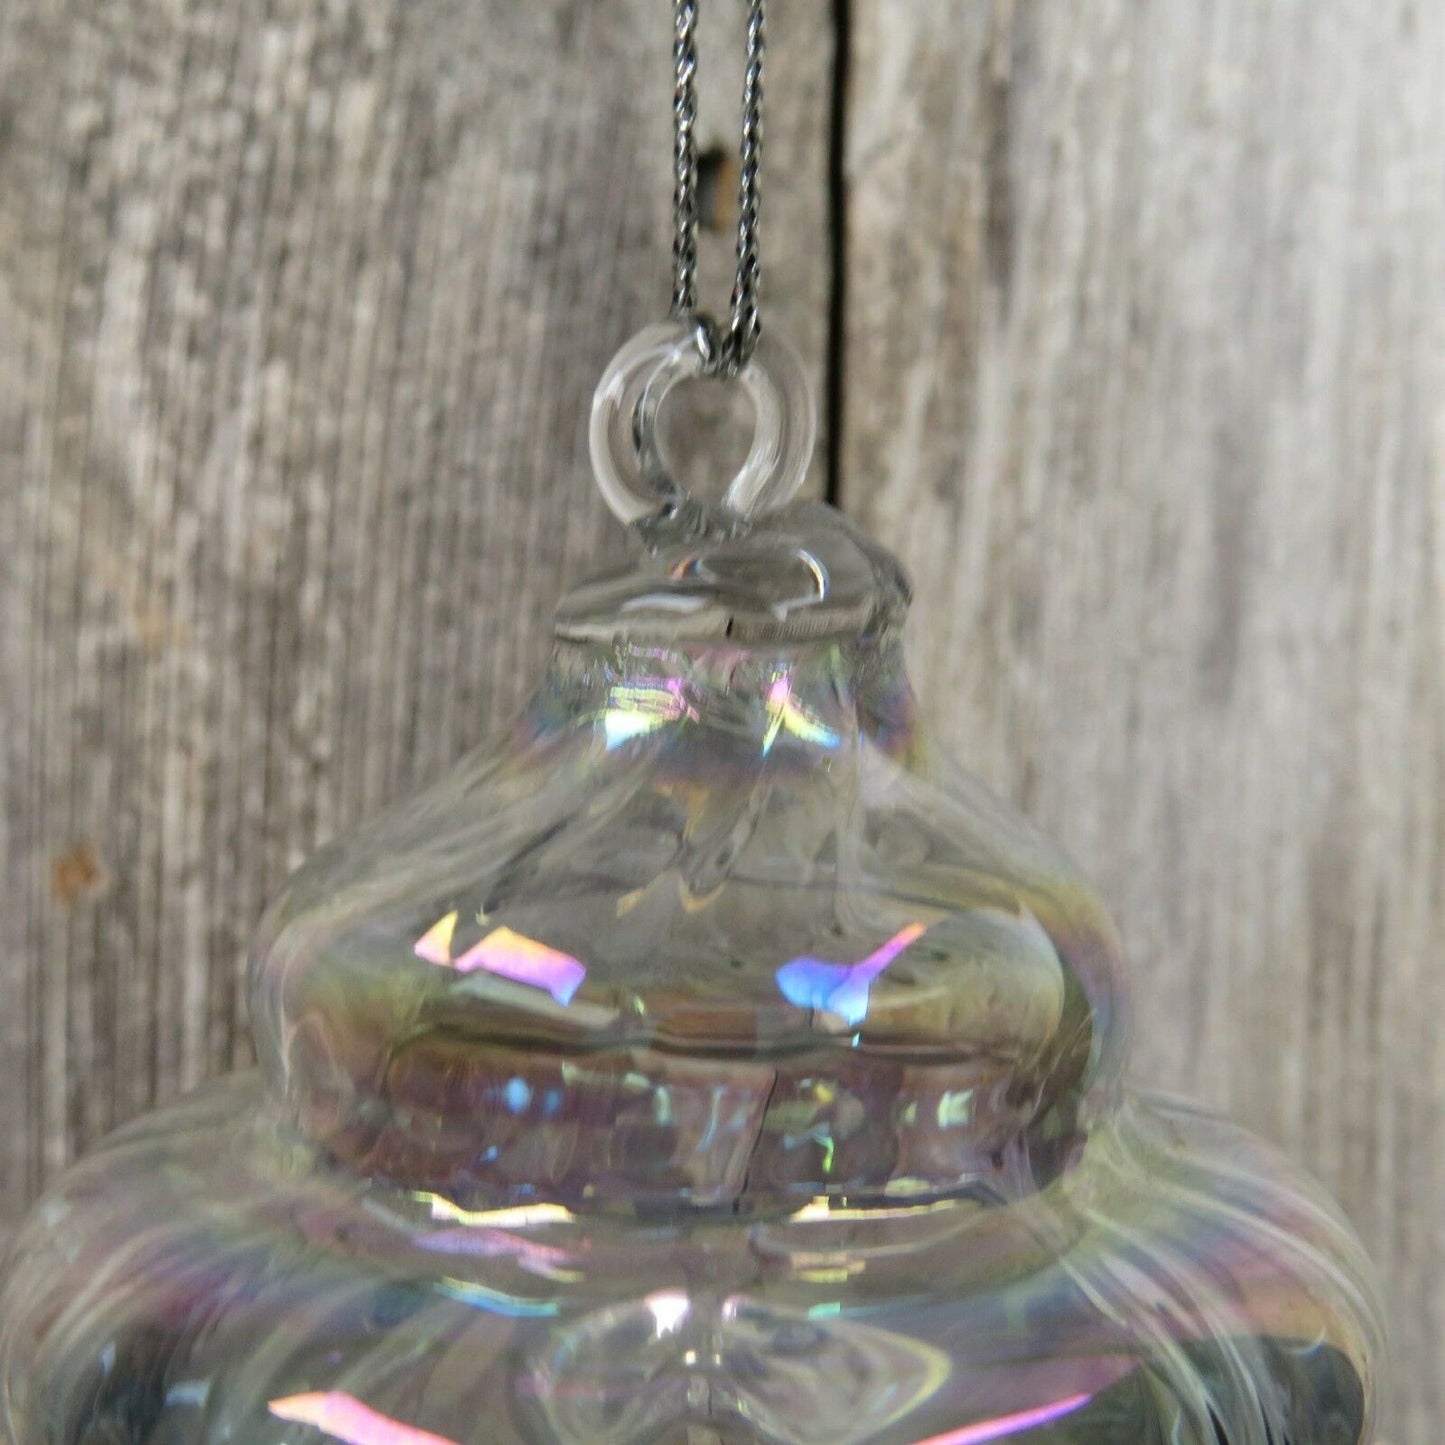 Vintage Glass Sea Shell Teardrop Ornament Christmas Dansk Hand Blown Iridescent - At Grandma's Table